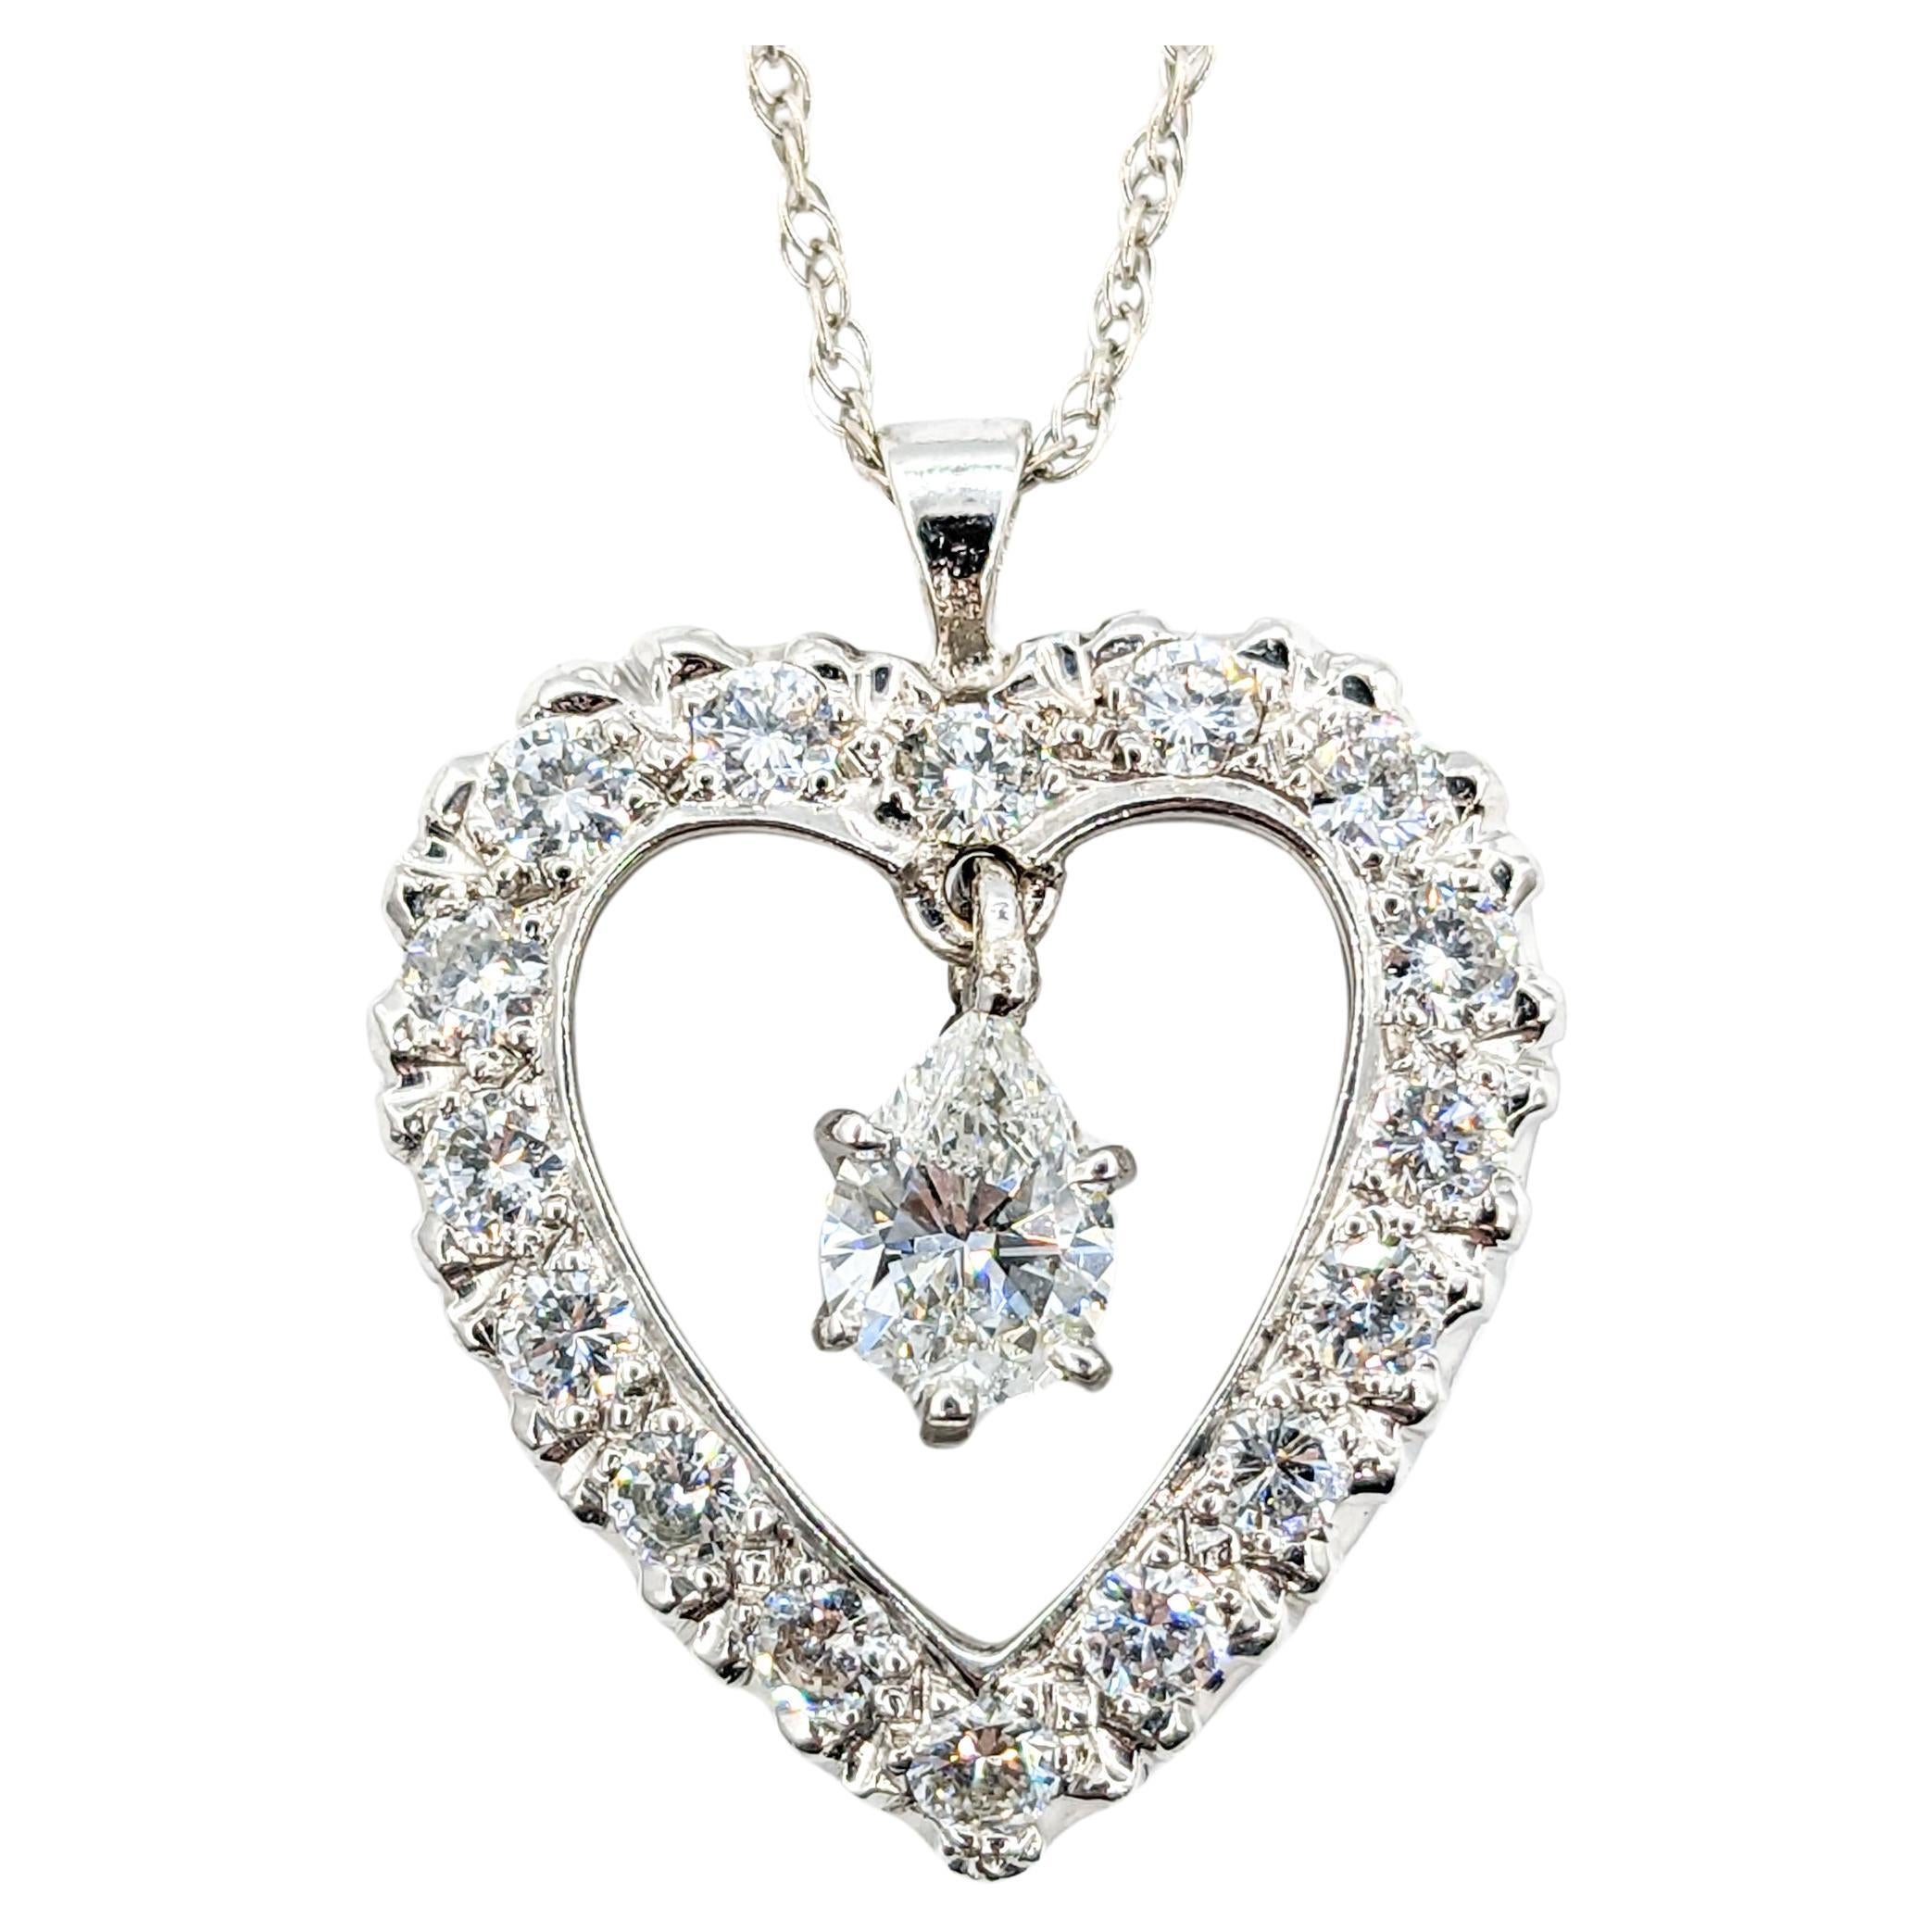  Feminine 1.30ctw Diamond Heart Pendant Necklace in White Gold For Sale